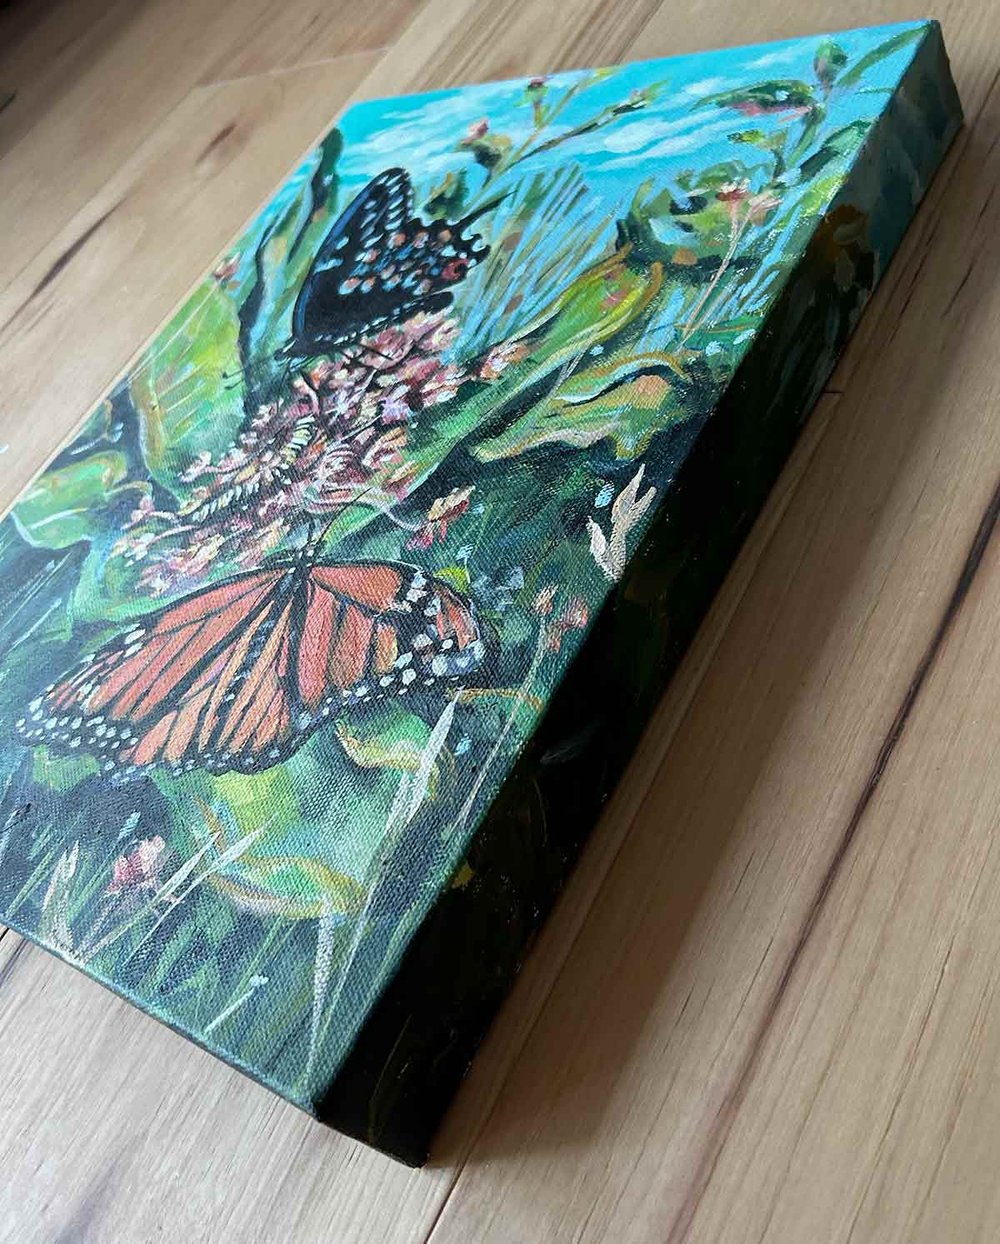 Flutter By – butterflies painting